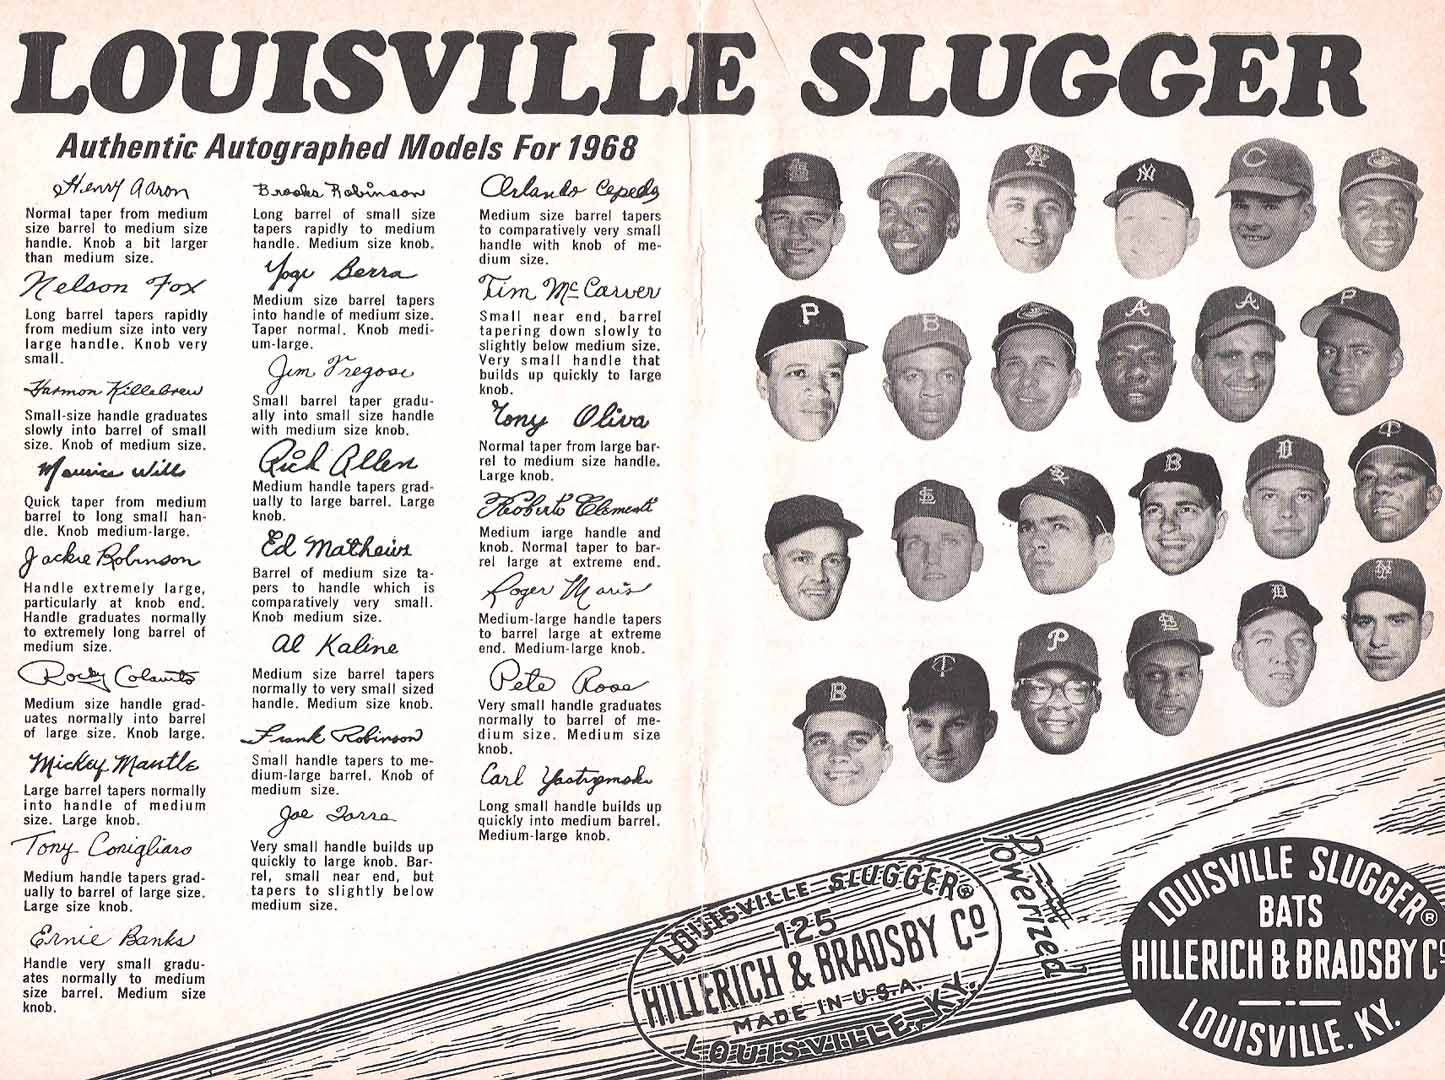 1968 louisville famous sluggers